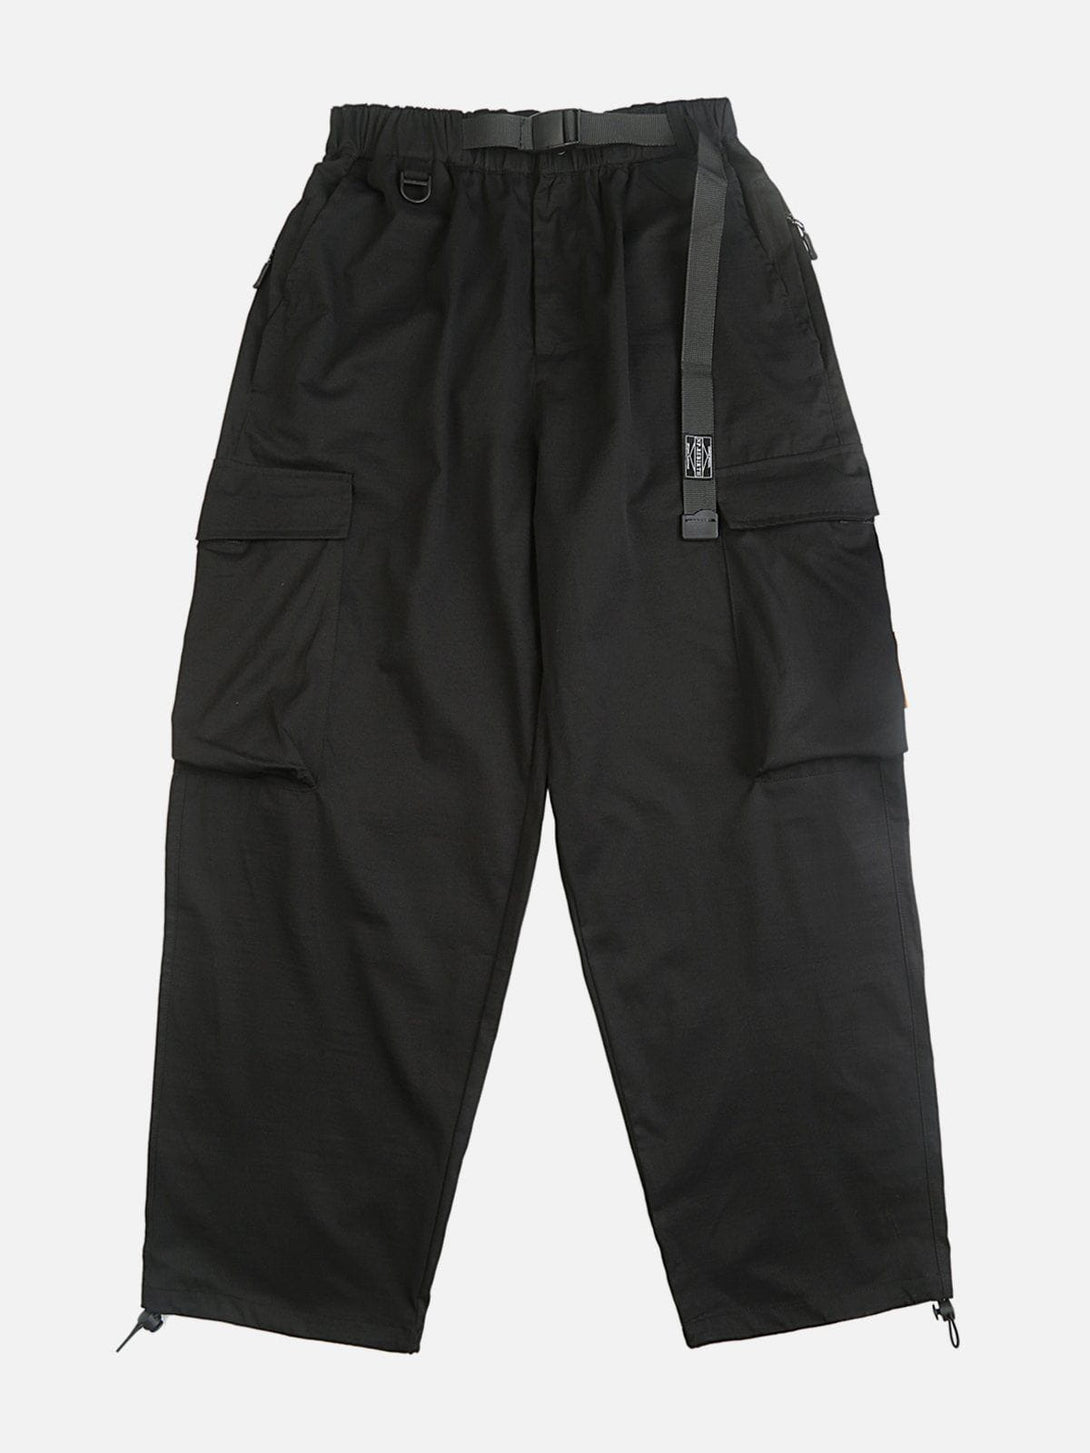 Majesda® - Multi-pocket Webbing Cargo Pants outfit ideas streetwear fashion